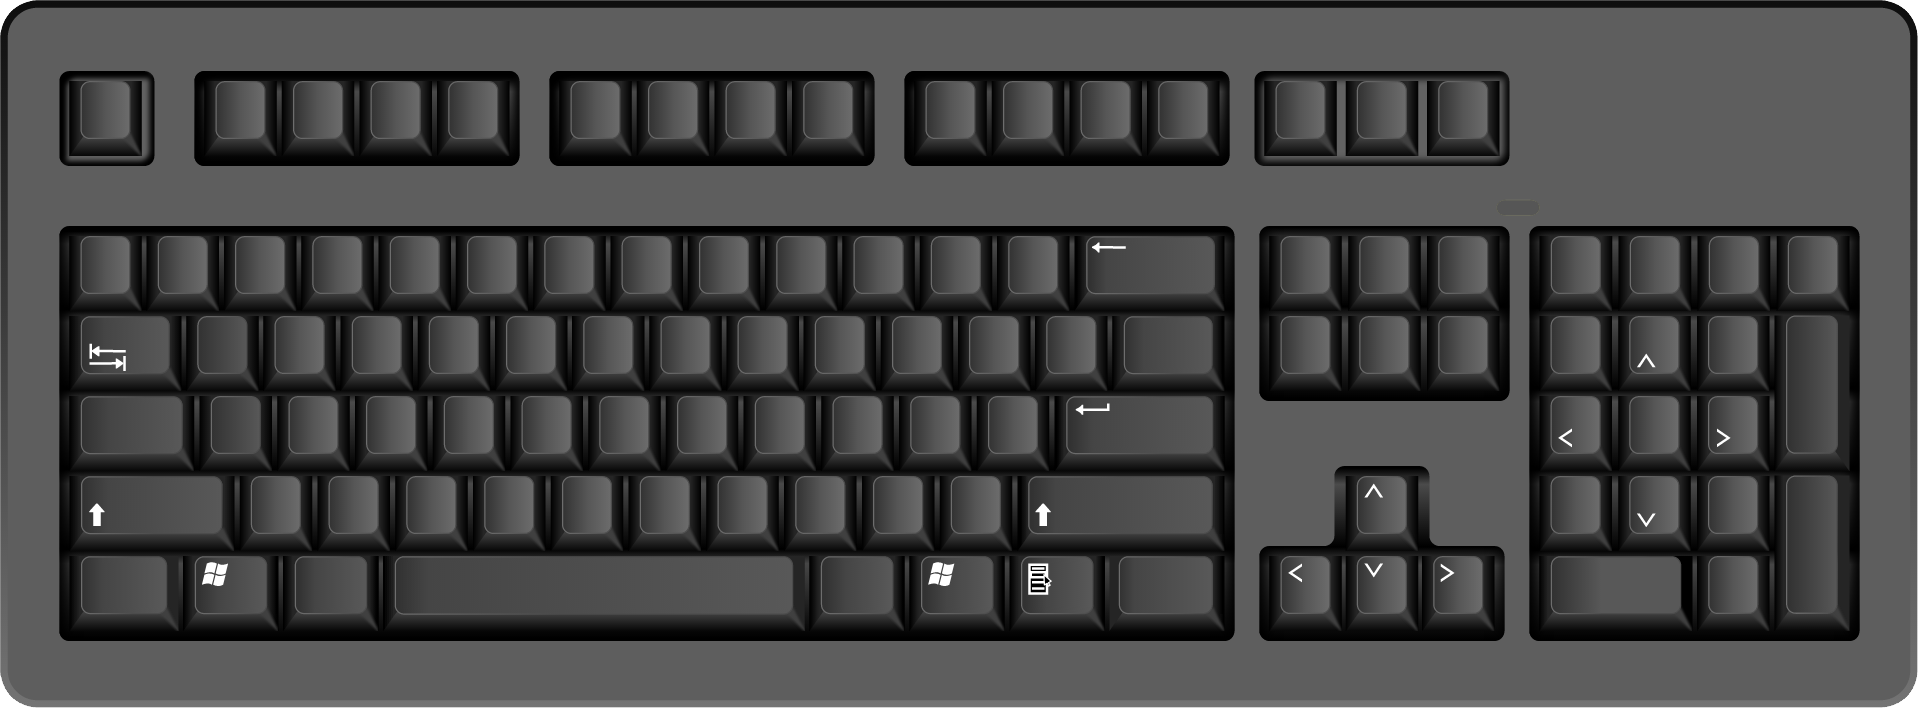 Czarna klawiatura komputerowa